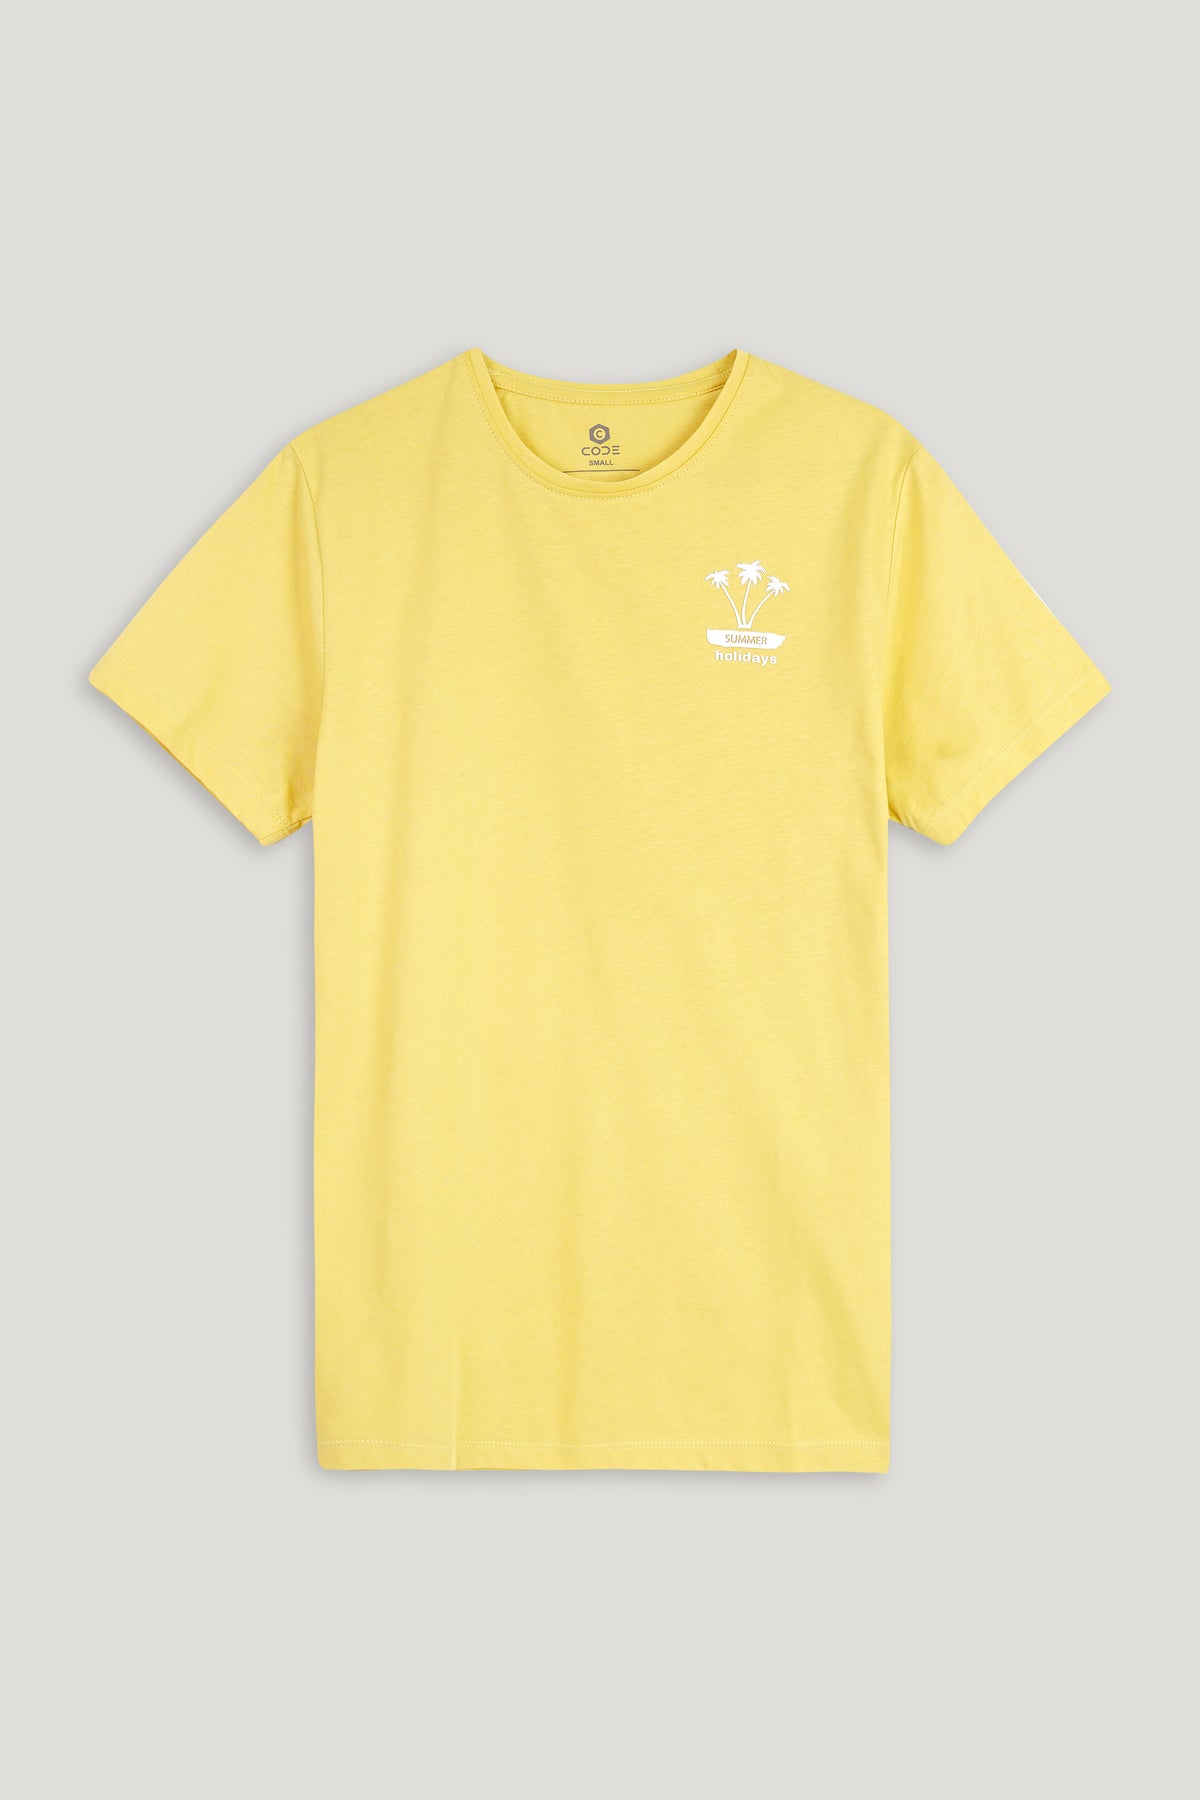 Energy Yellow Graphic Printed T-Shirt